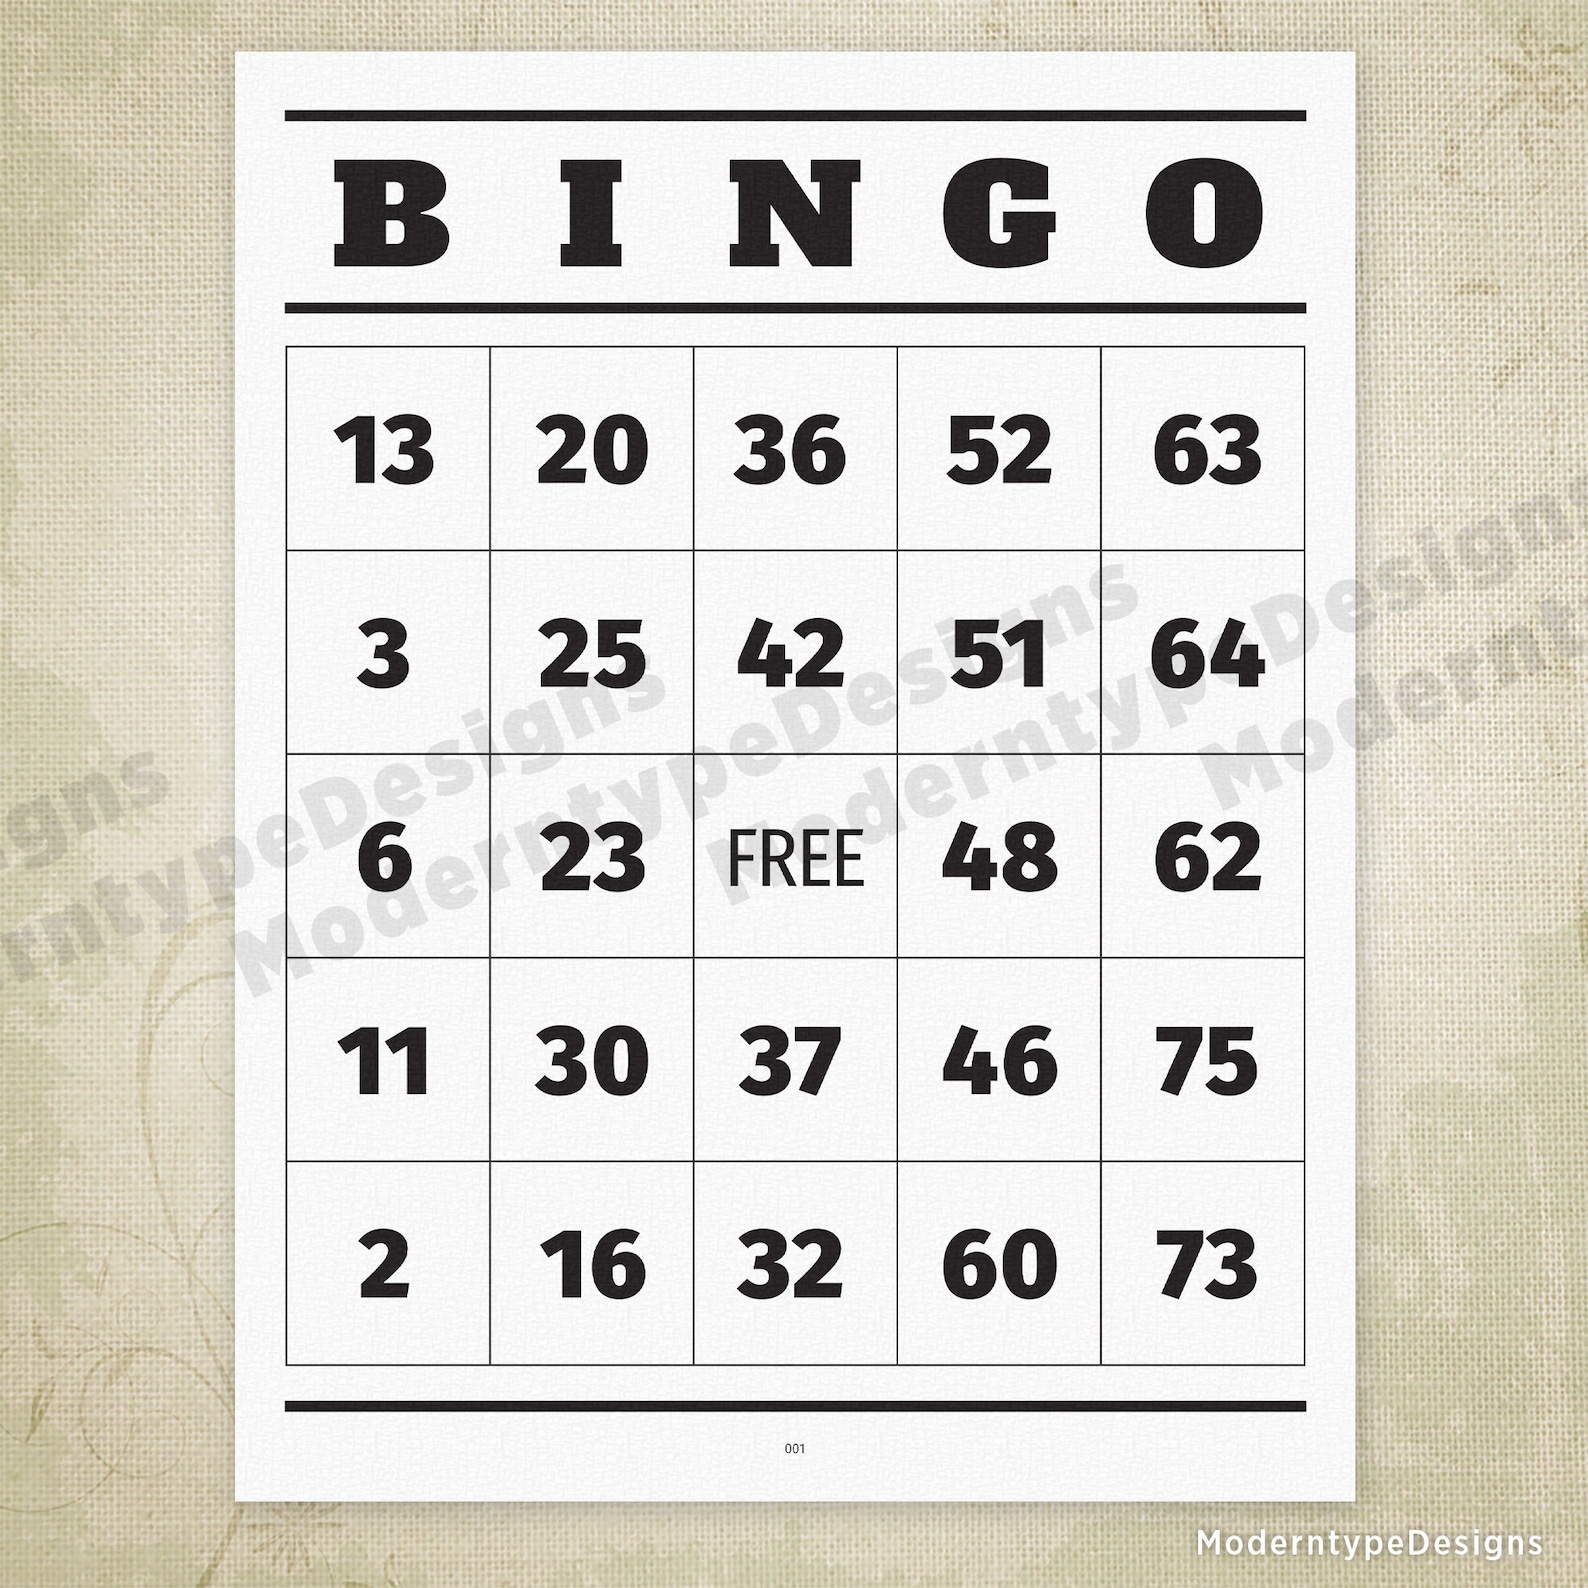 numbered-bingo-cards-printable-100-pages-1-75-random-b-i-n-g-o-game